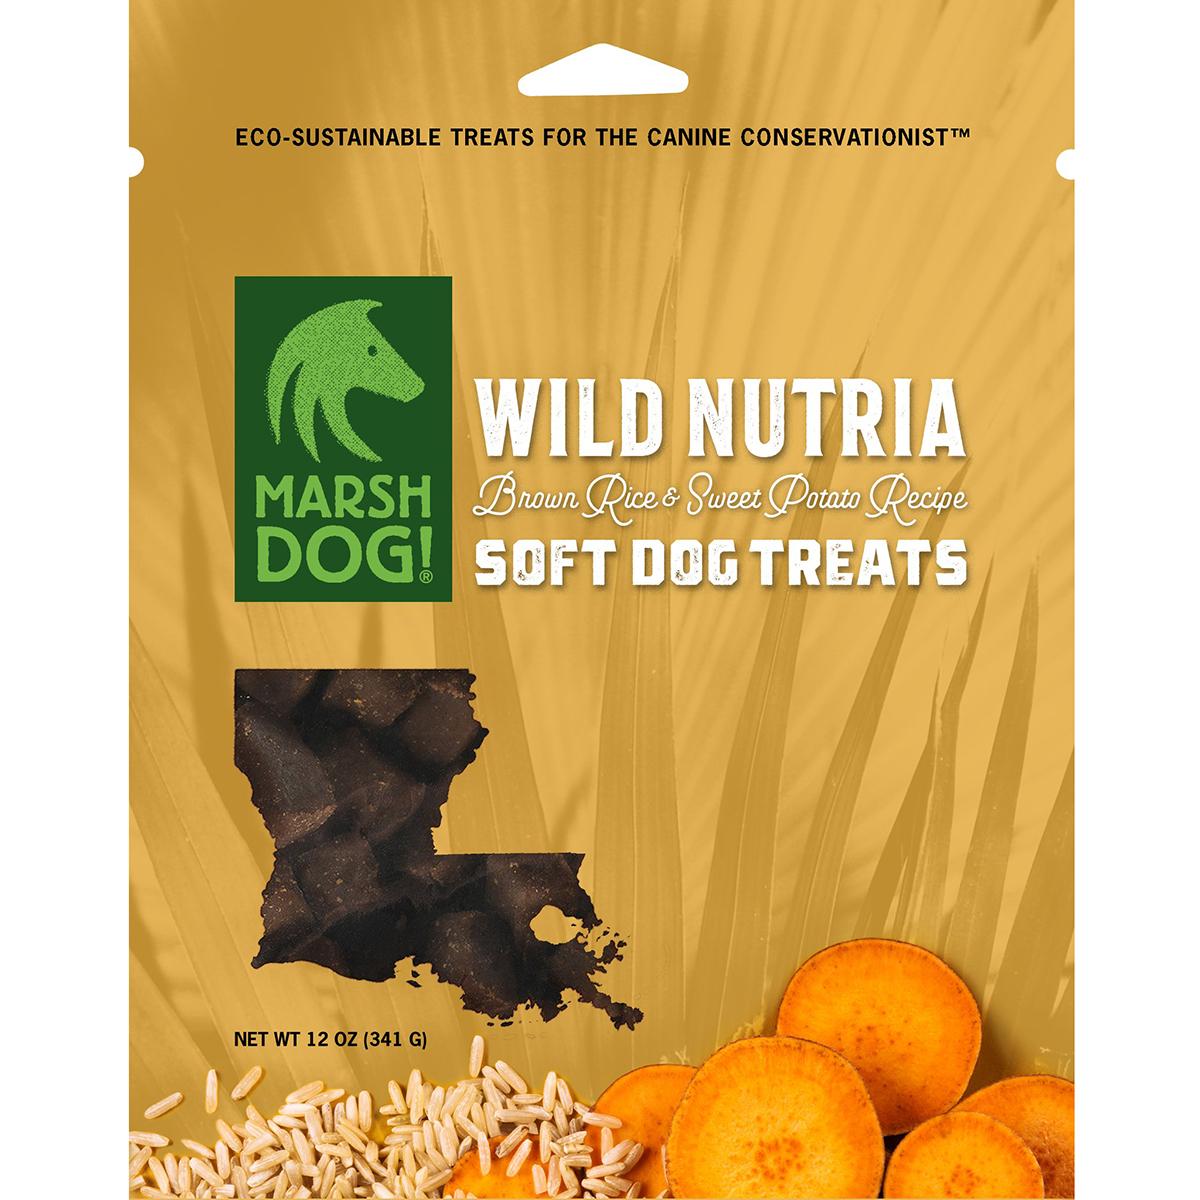 Marsh Dog Wild Nutria Brown Rice & Sweet Potato Recipe Soft Dog Treats